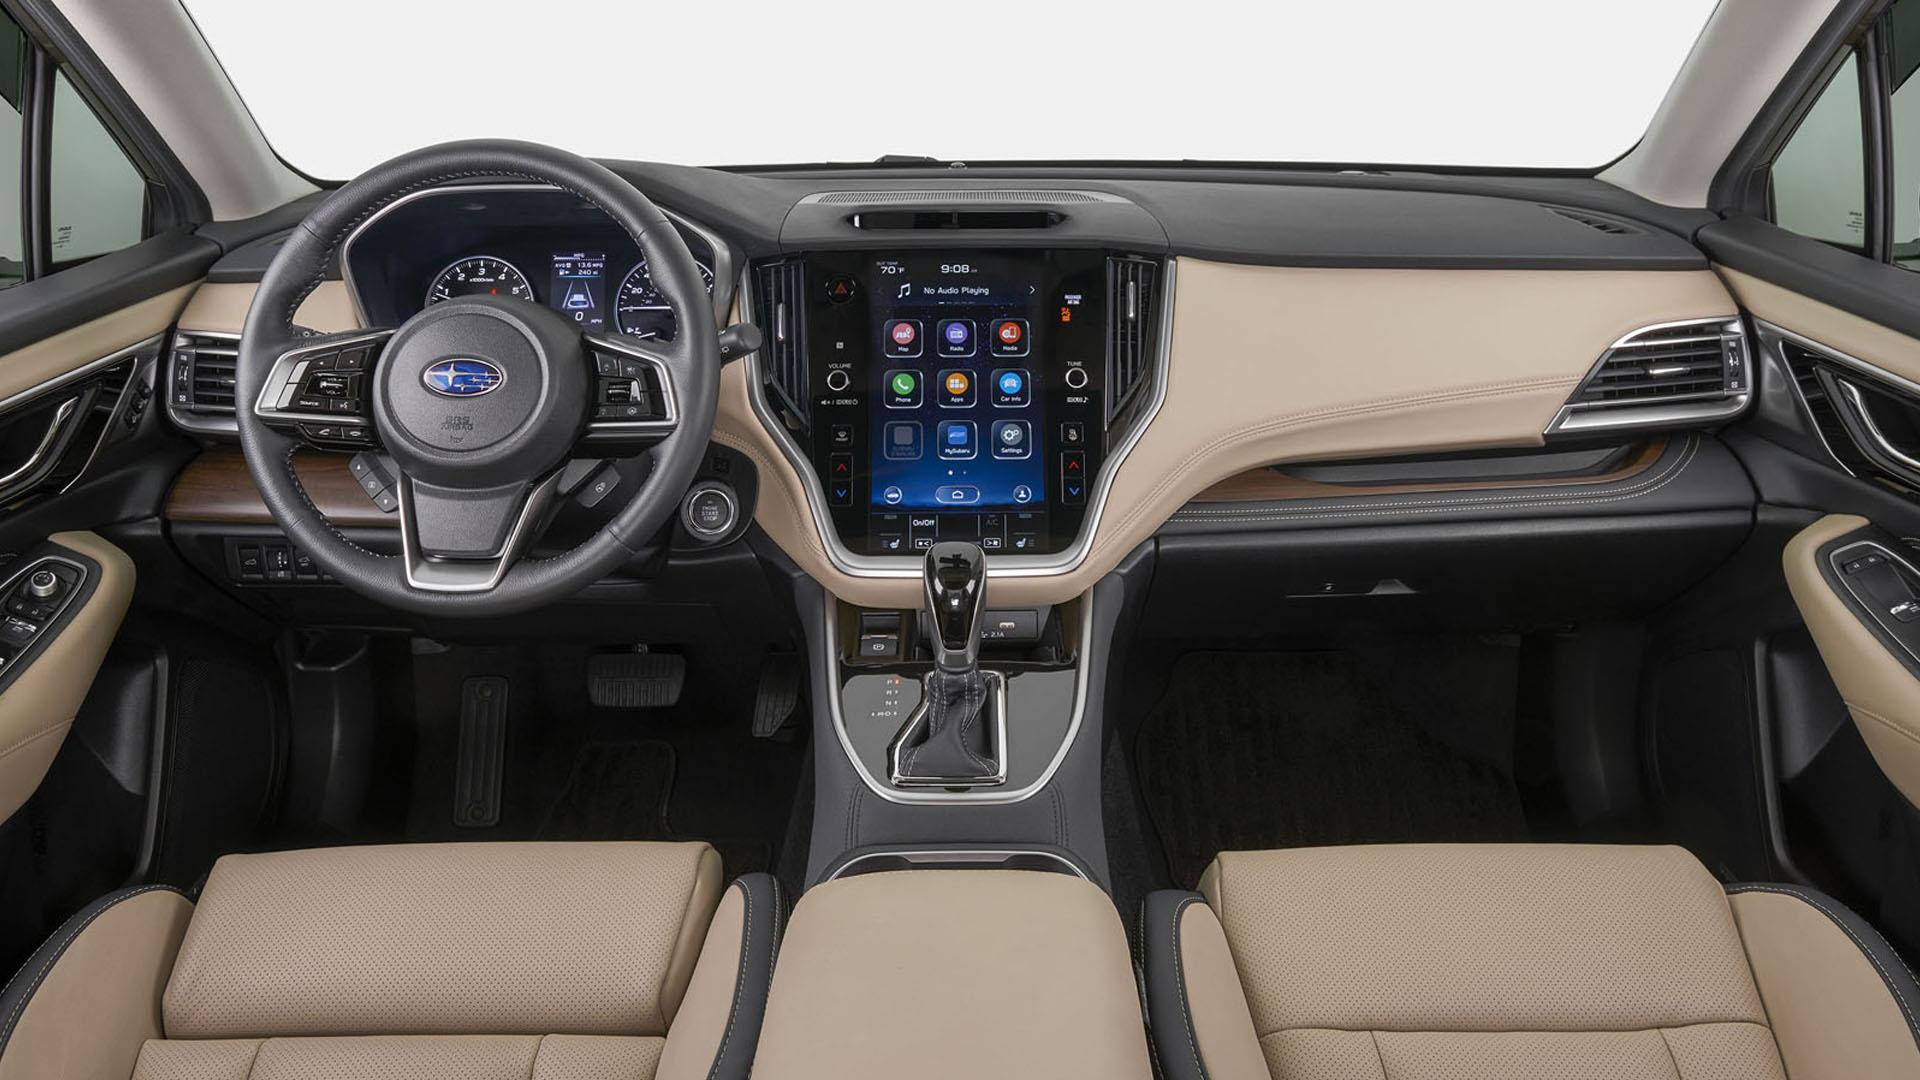 2020 Subaru Outback Touring Interior Trim Kit Woodgrain. Upgrade your